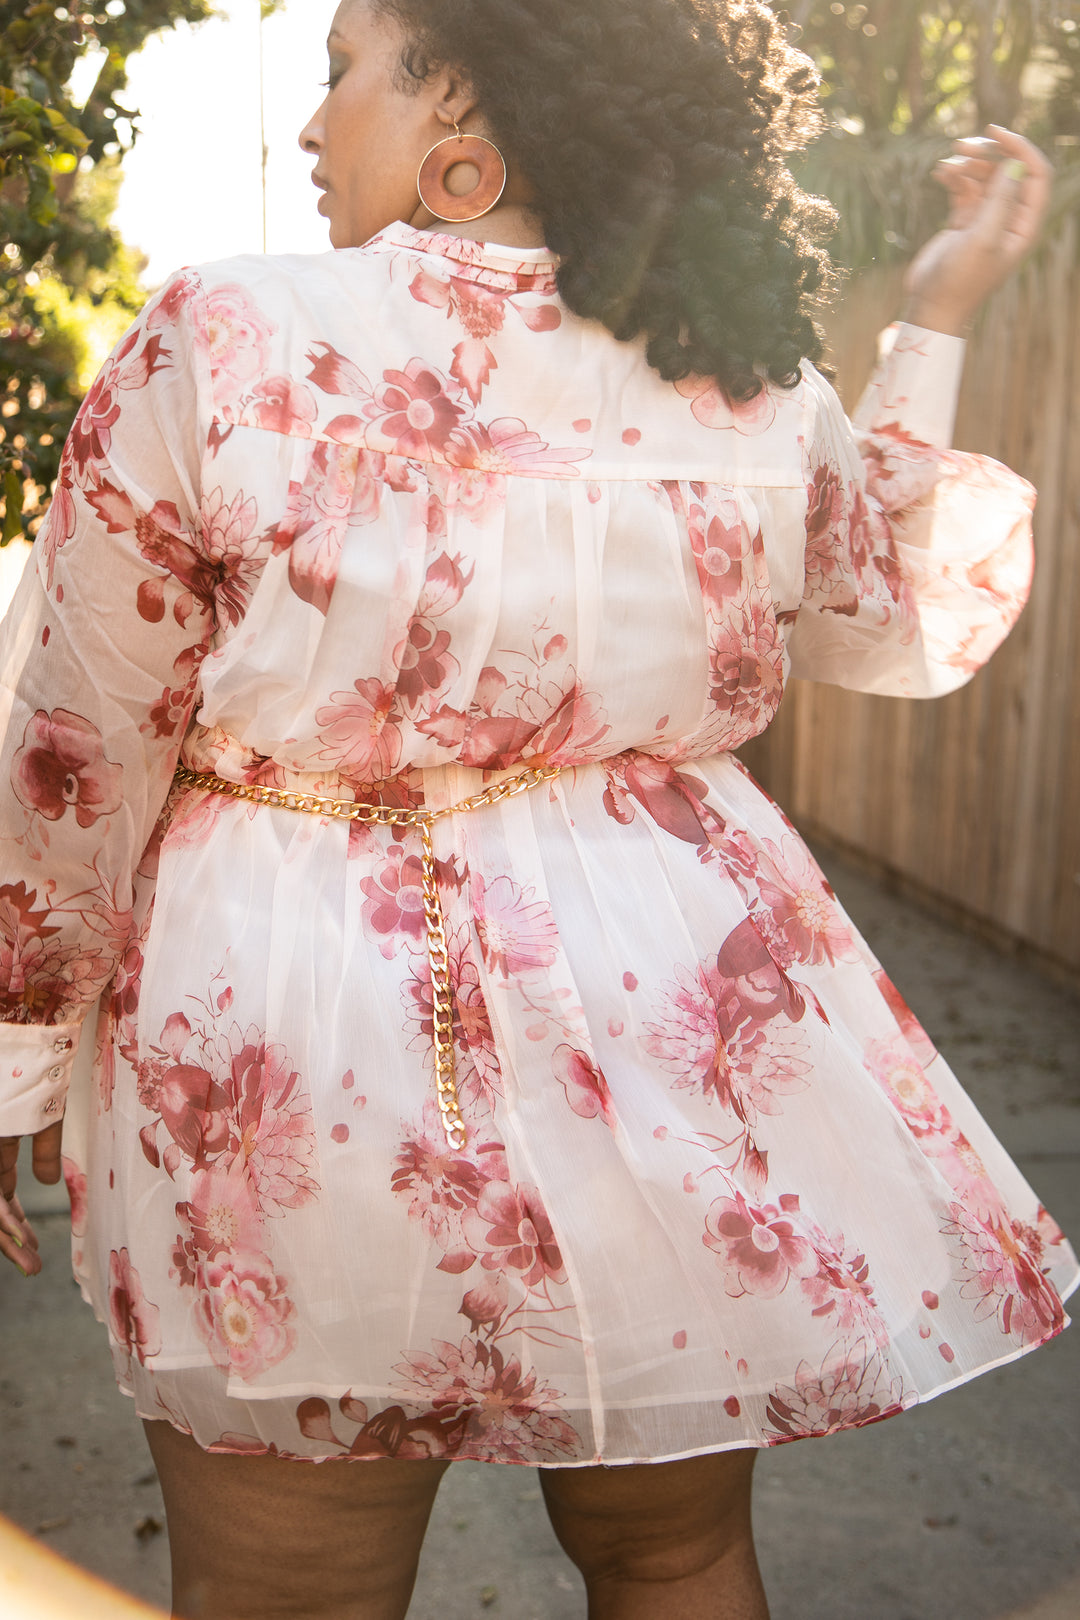 The Sweet Like Ice Cream Chiffon Empire Waist Dress in Floral Print